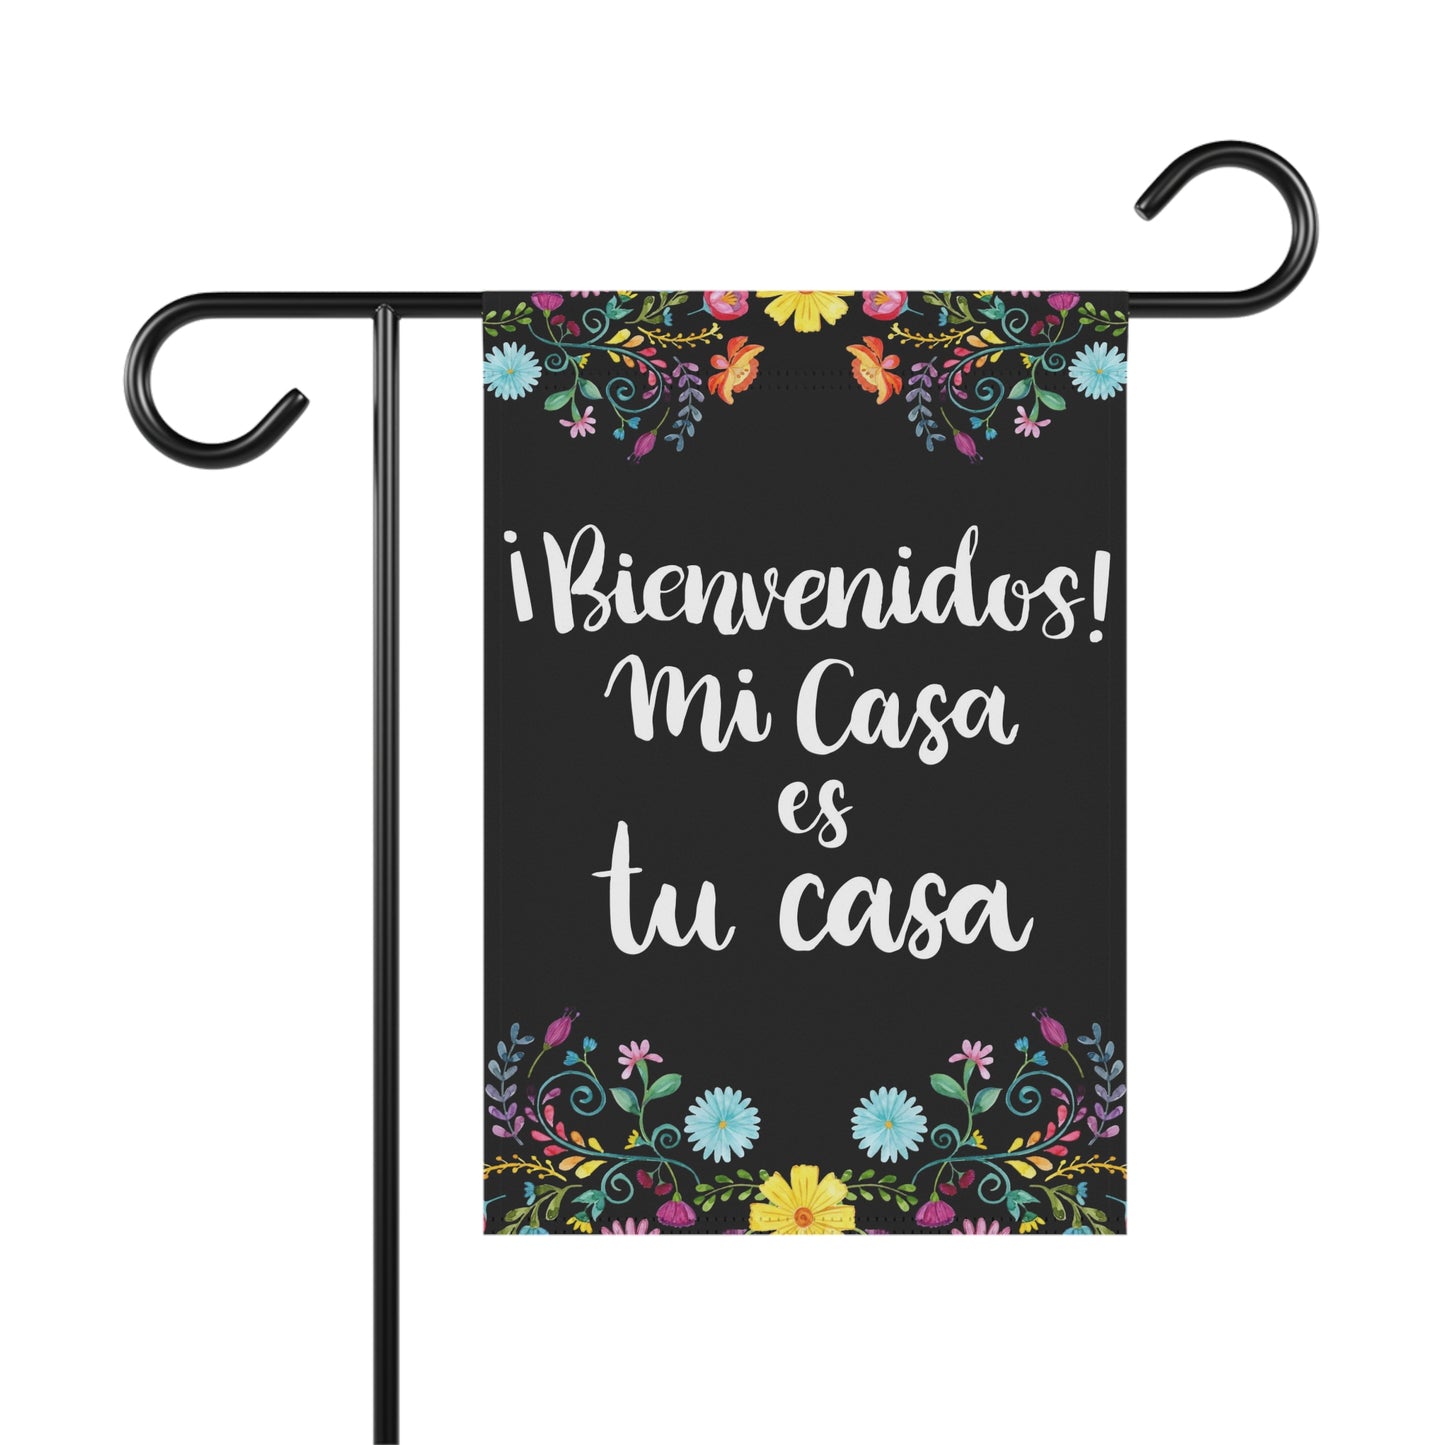 Mi casa es tu casa garden flag with flowers and black background. Hispanic garden flat for Mexican mom, Latin friends or Spain neighbors